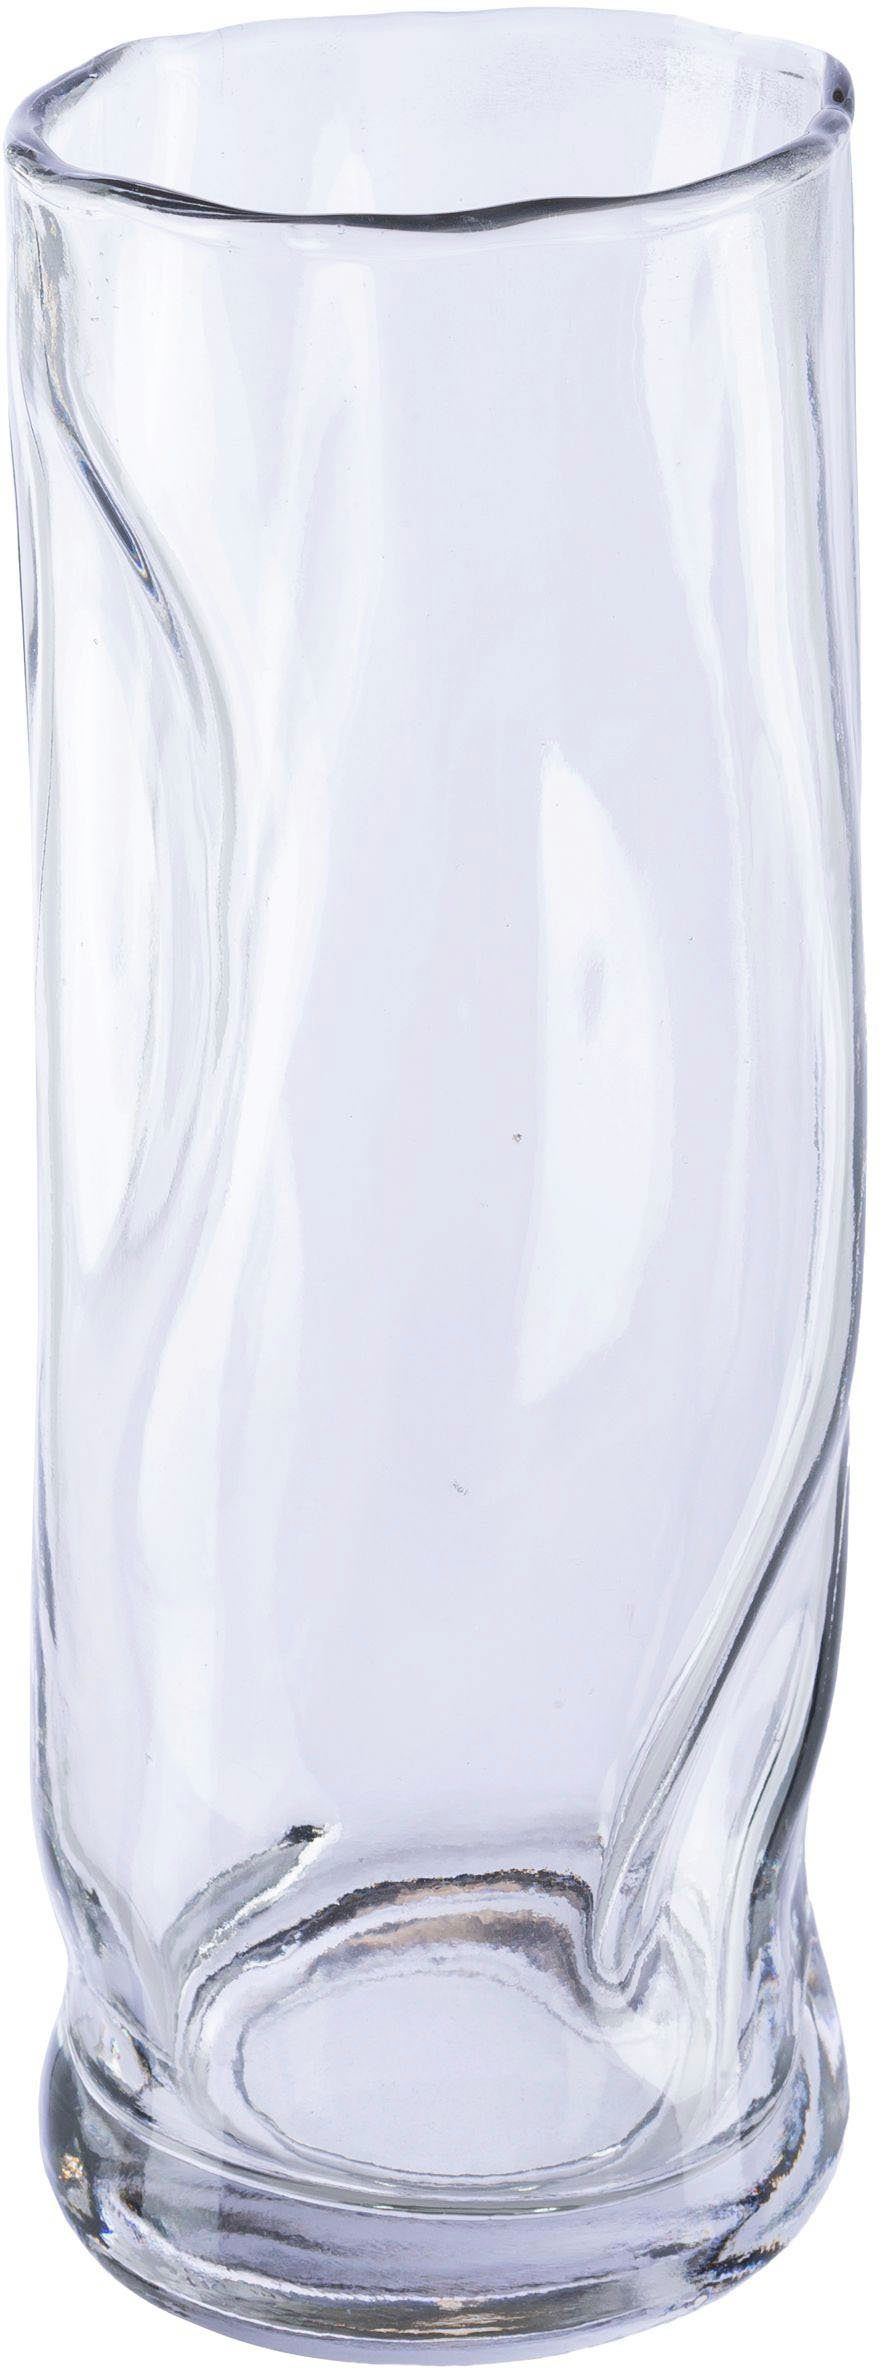 Leonique Tischvase Blumenvase (1 im cm 26 Höhe Crunch-Design, transparent aus ca. Glas, Caline St), Vase